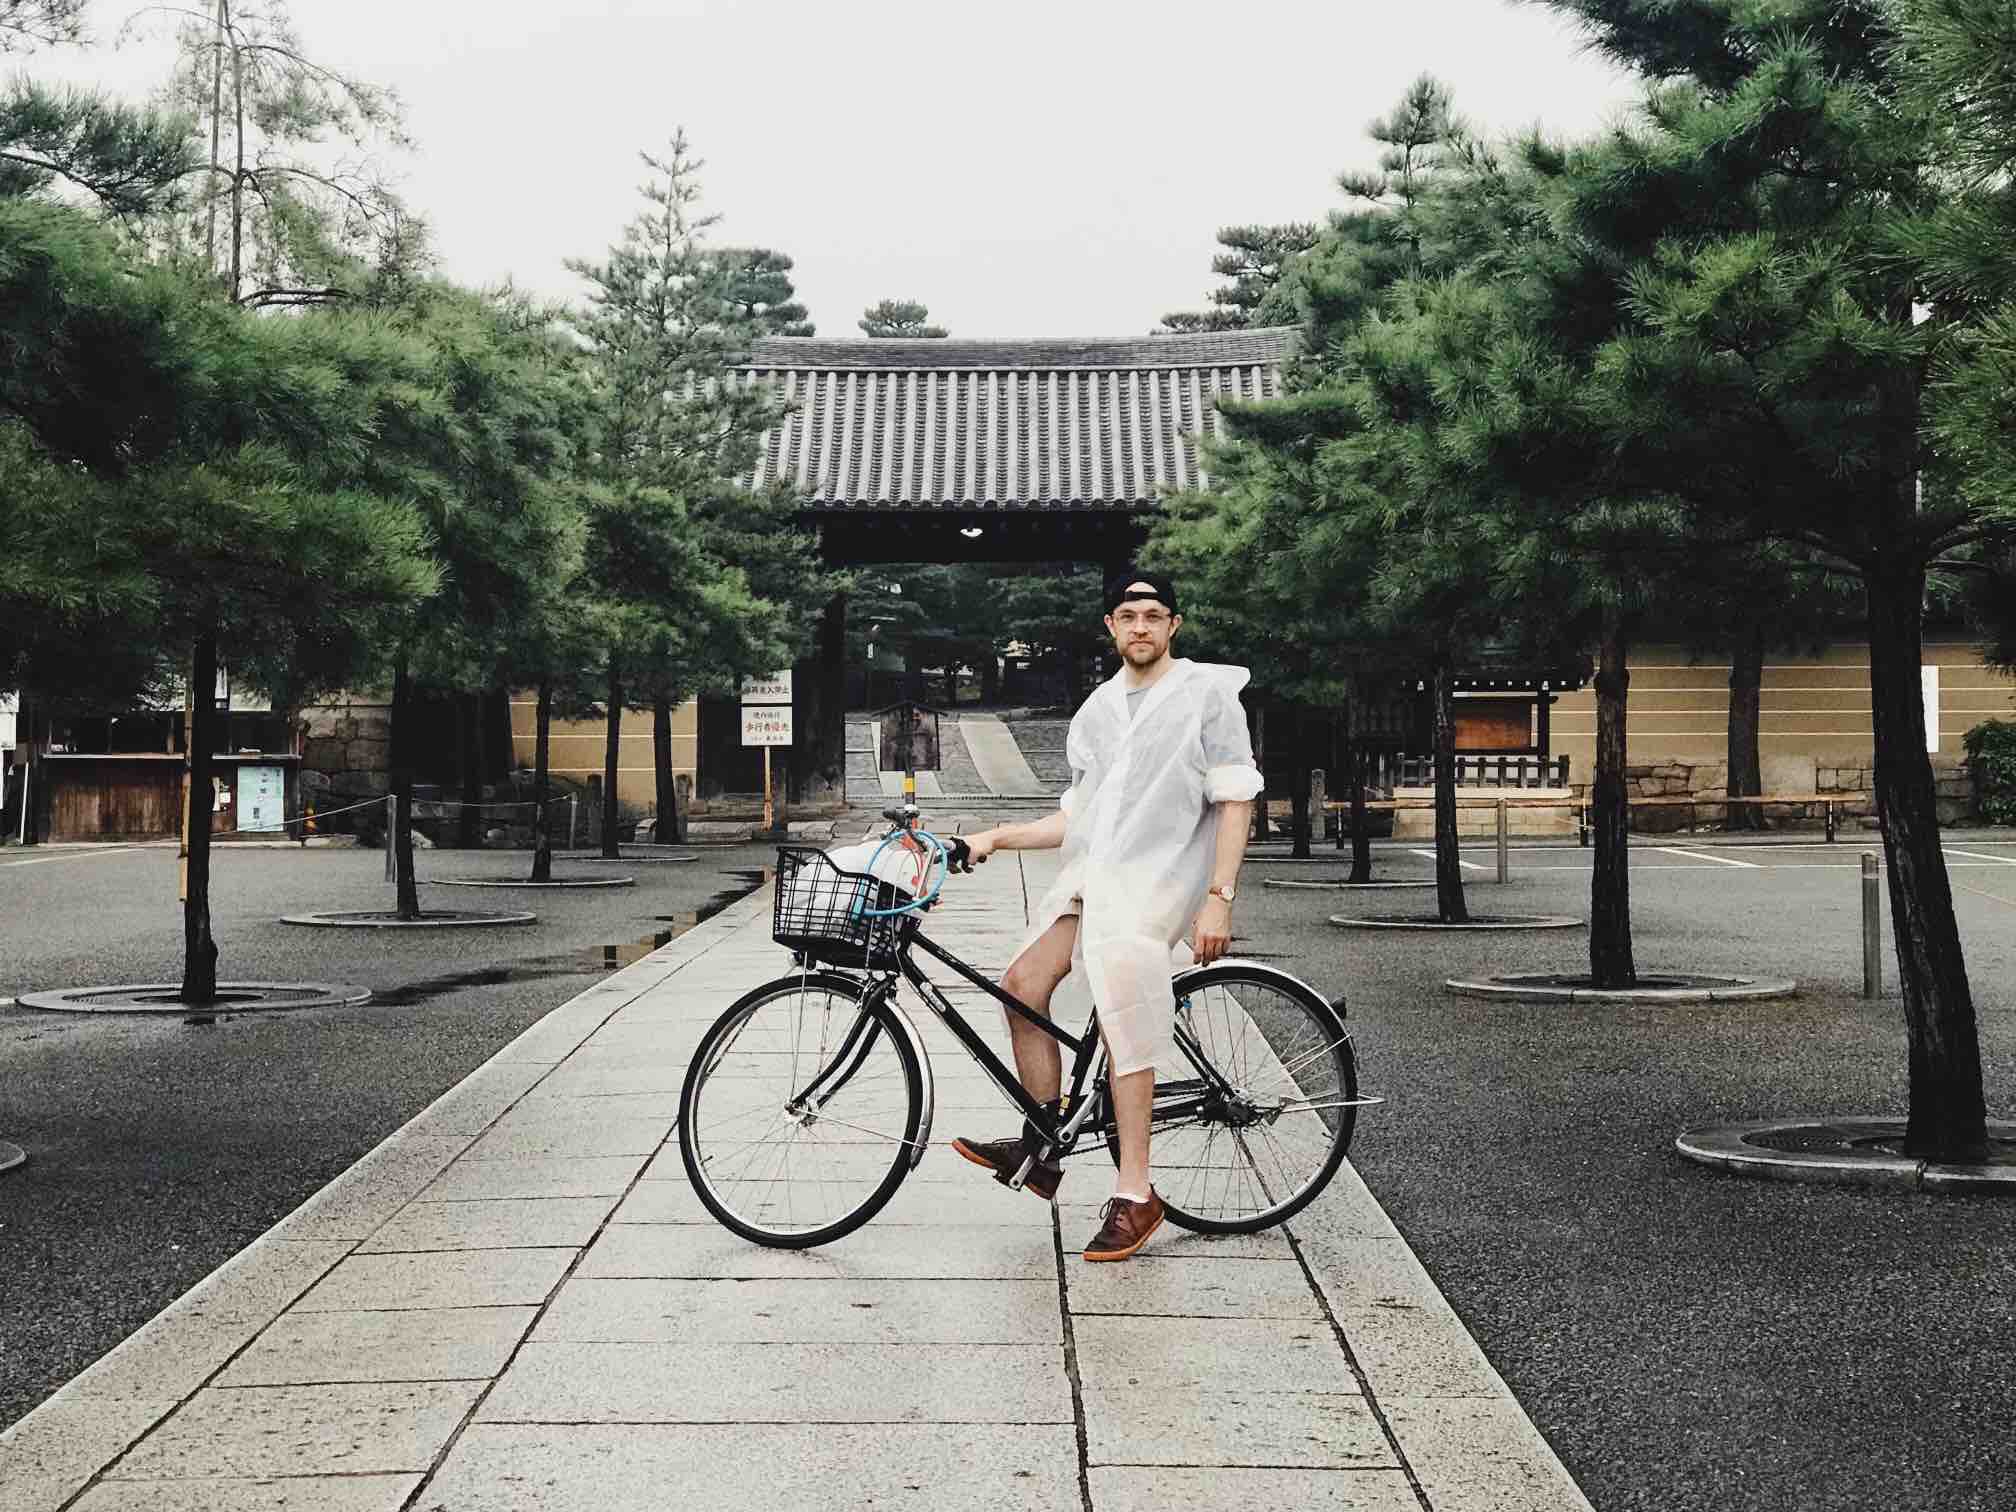 Joe riding a bike in Japan